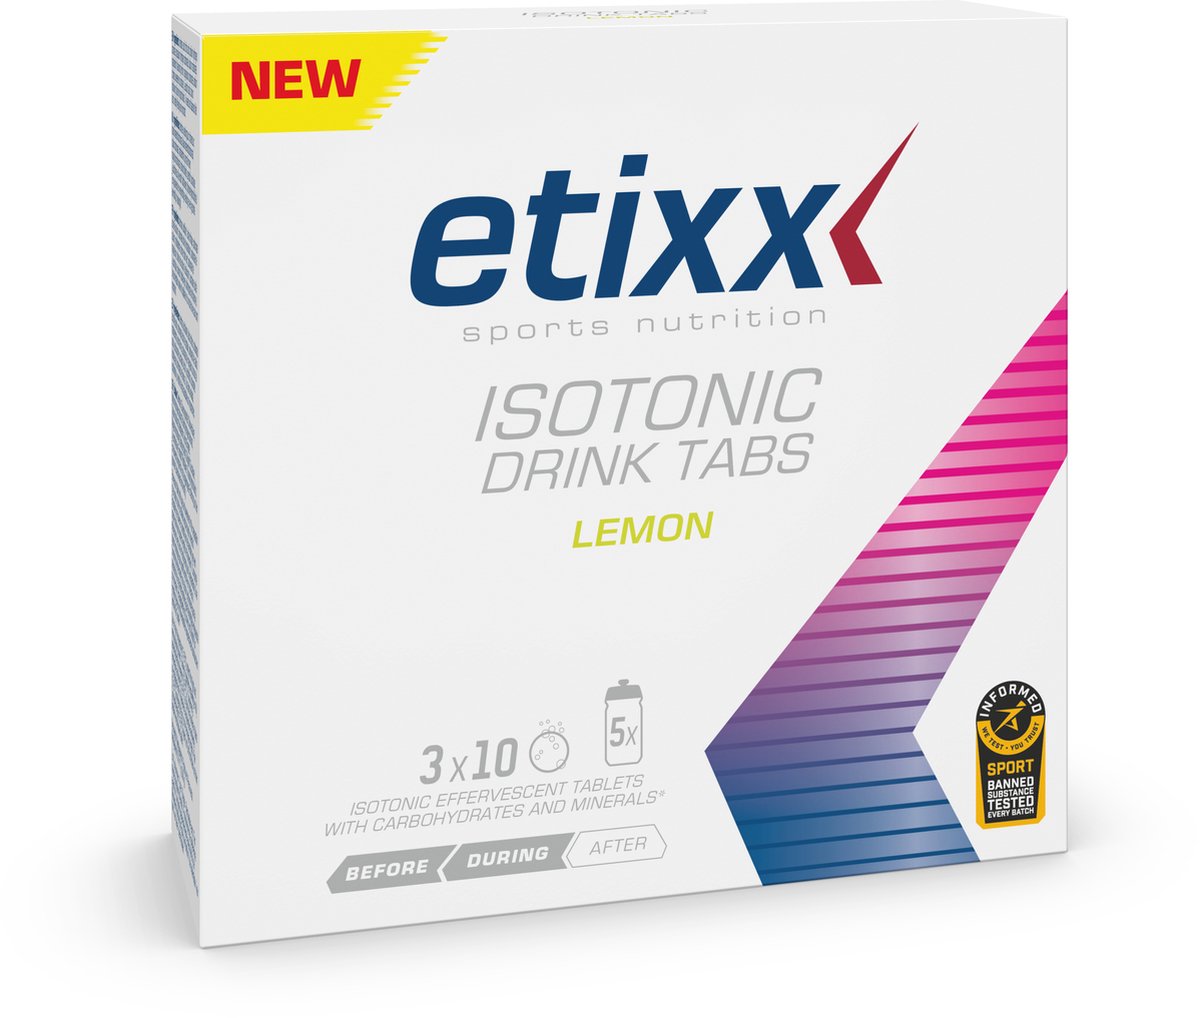 Etixx Tabletten Endurance Isotonic Drink Tabs